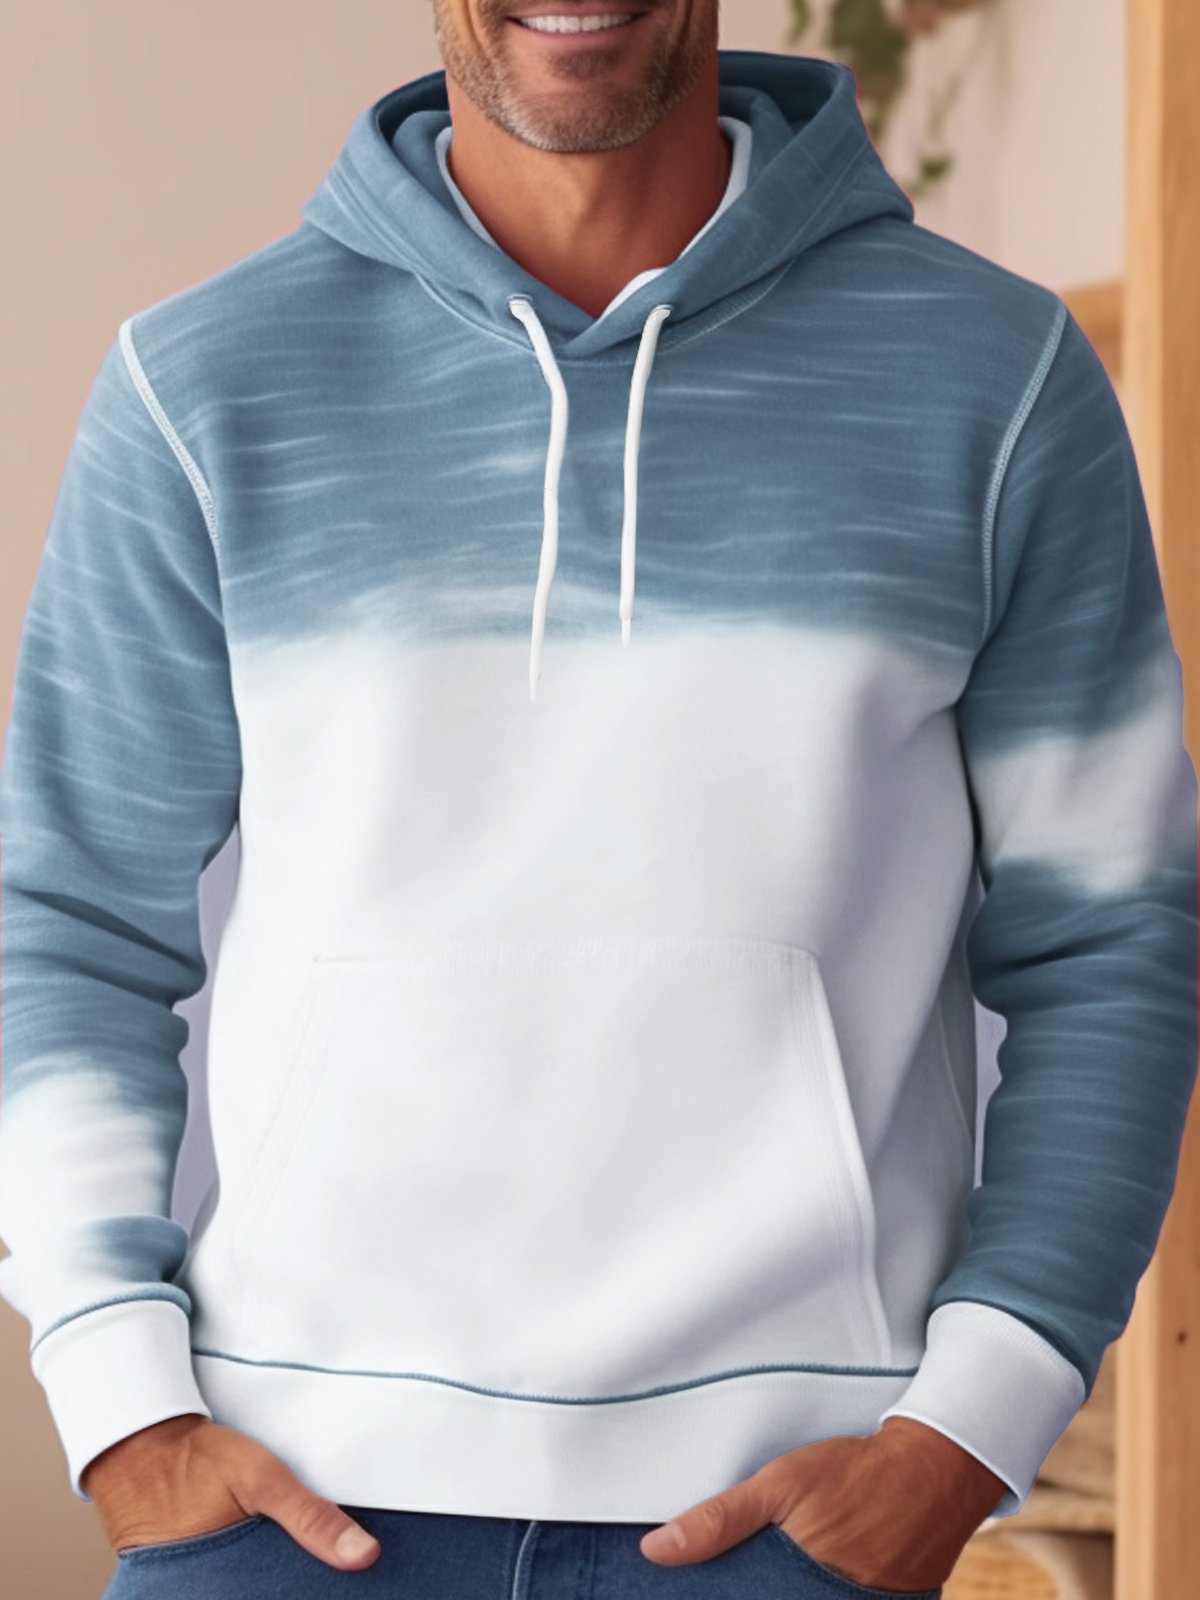 JoyMitty Vintage Gradient Texture Men's Drawstring Hoodies Stretch Large Size Art Fun Pullover Sweatshirts